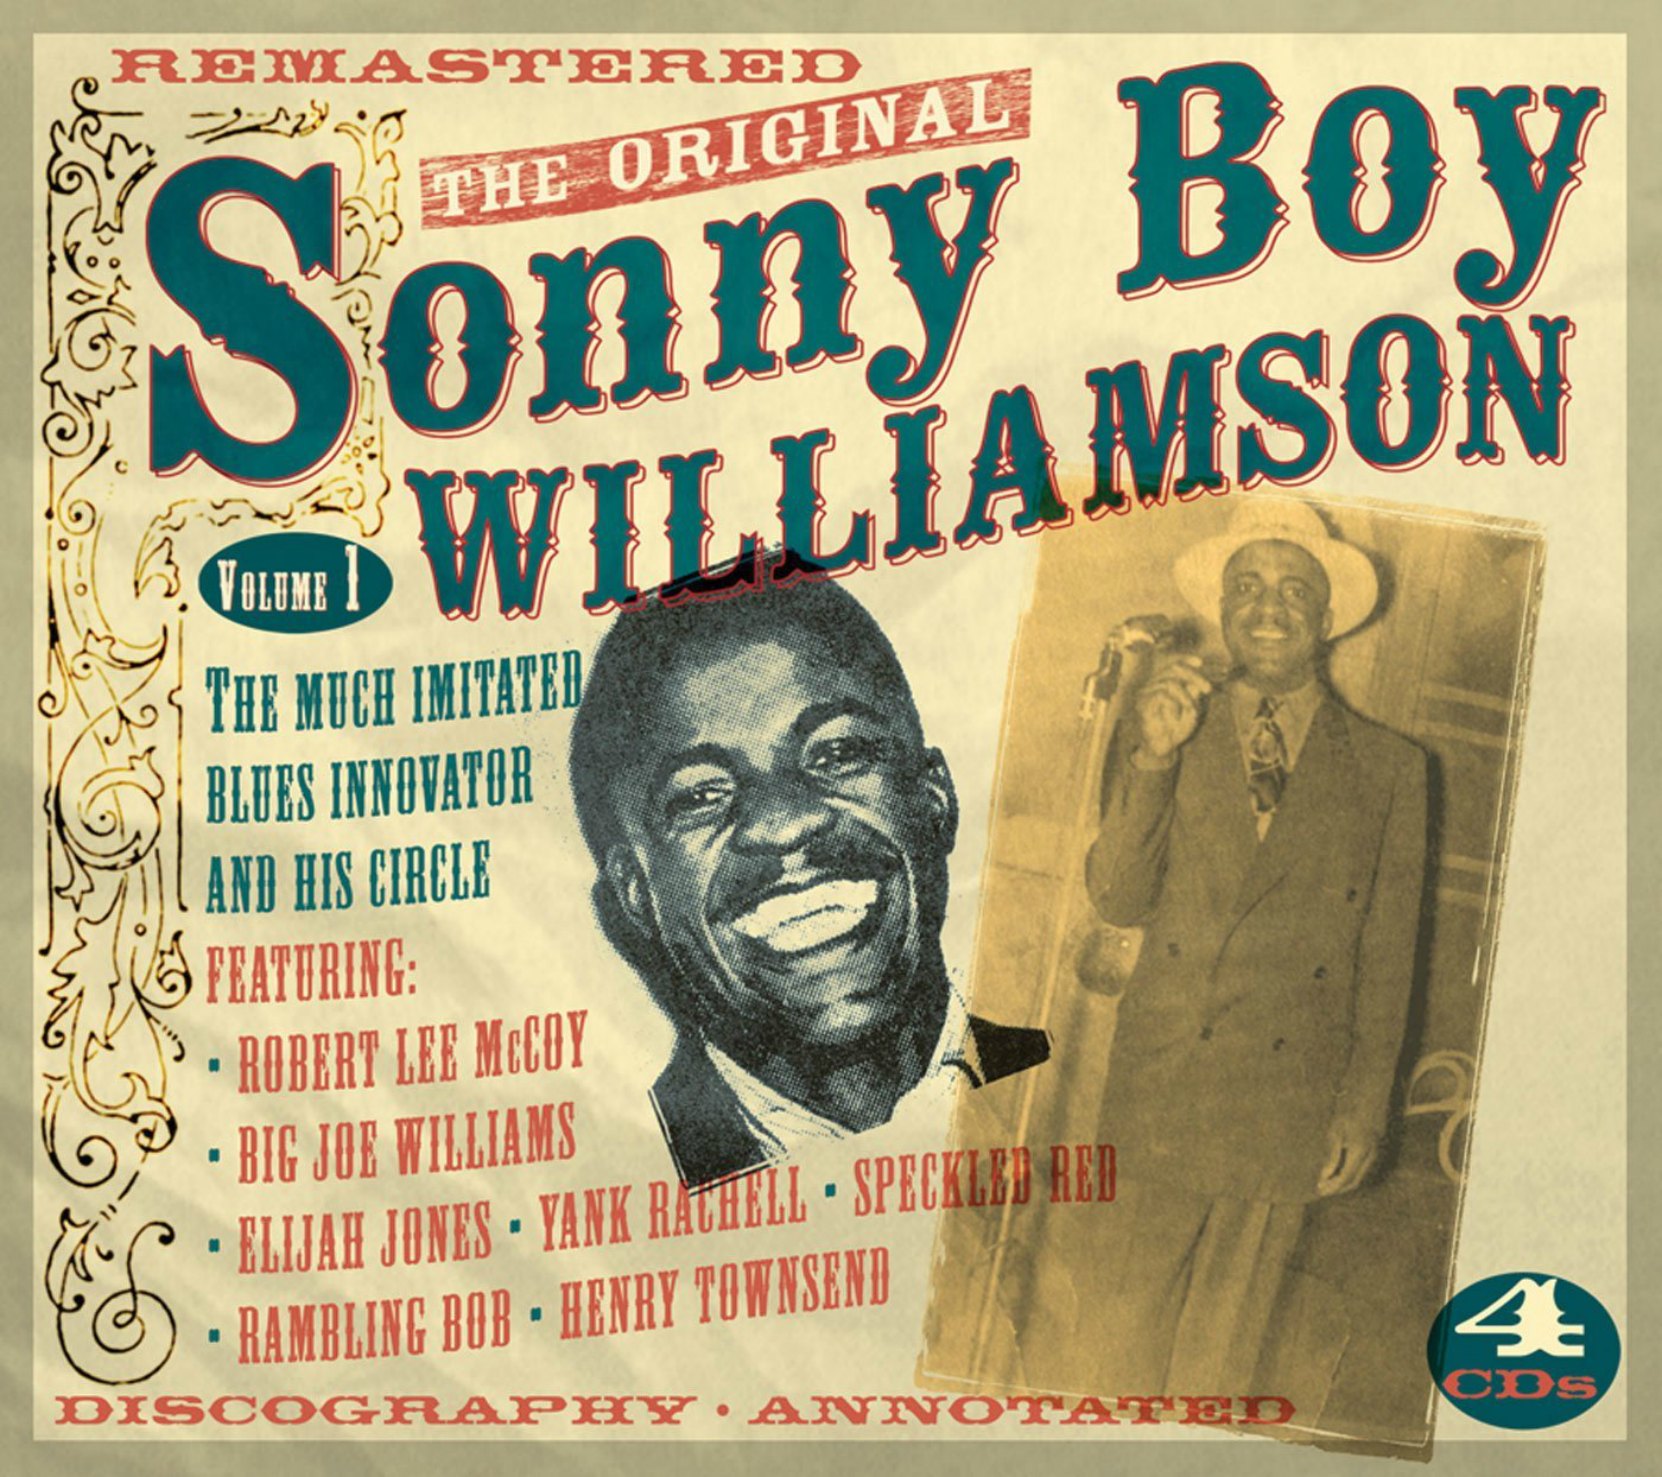 CD cover,The Original Sonny Boy Williamson, Volume 1, a 4 CD set released on JSP Records